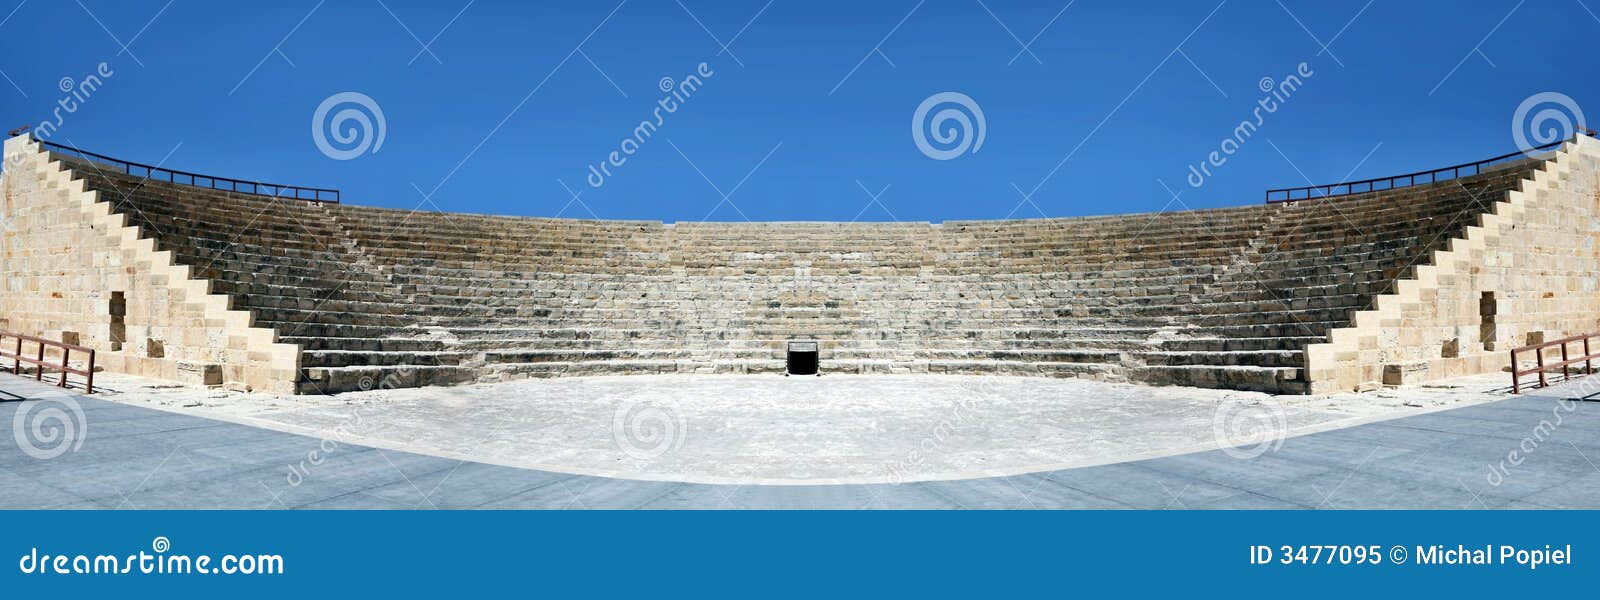 greek amphitheatre